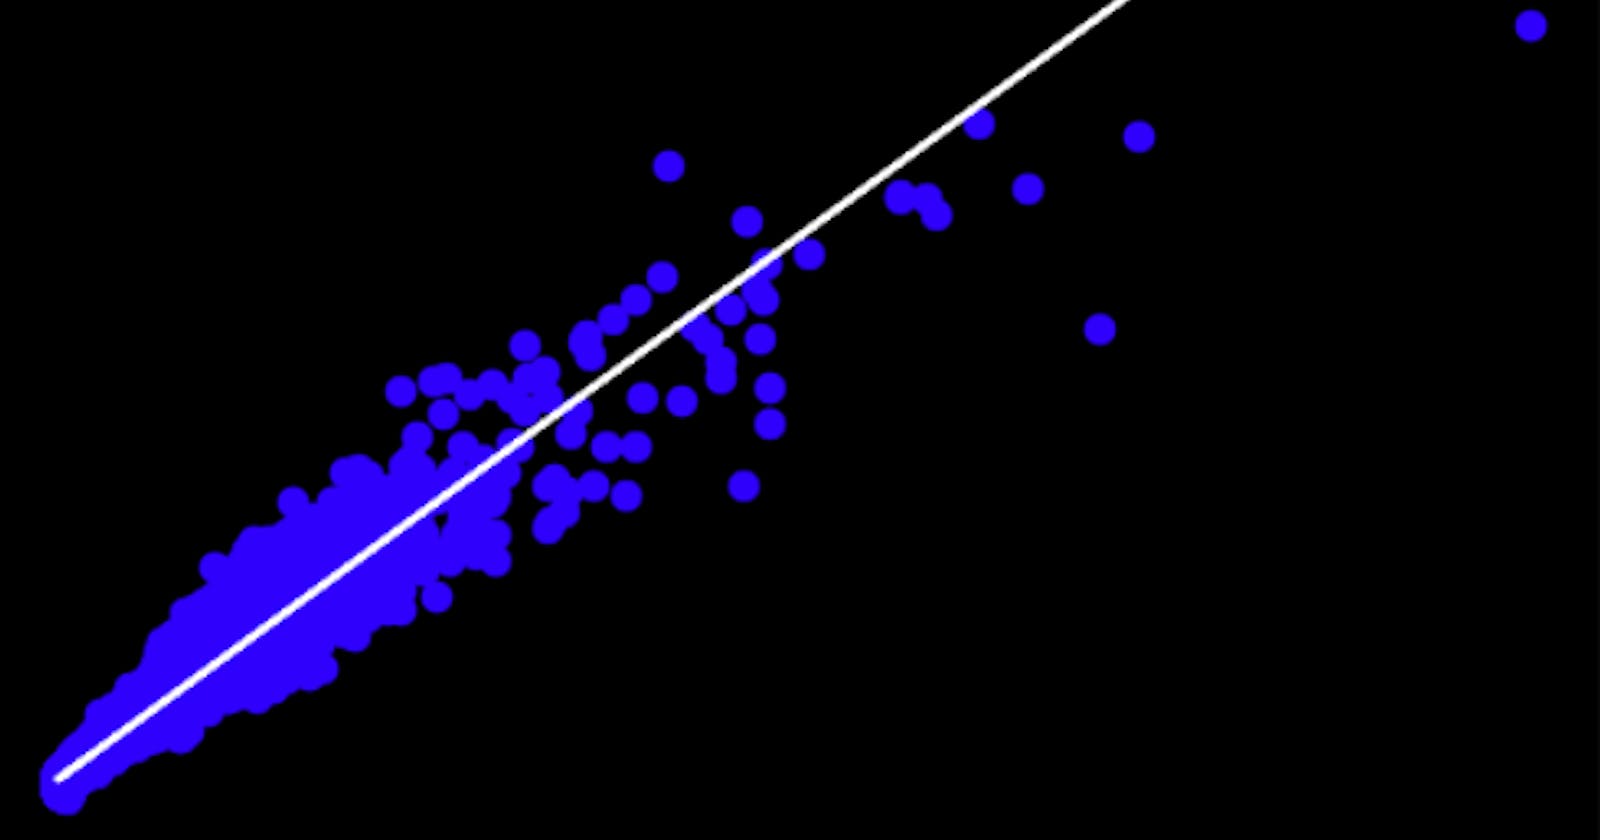 Basic Linear Regression Model